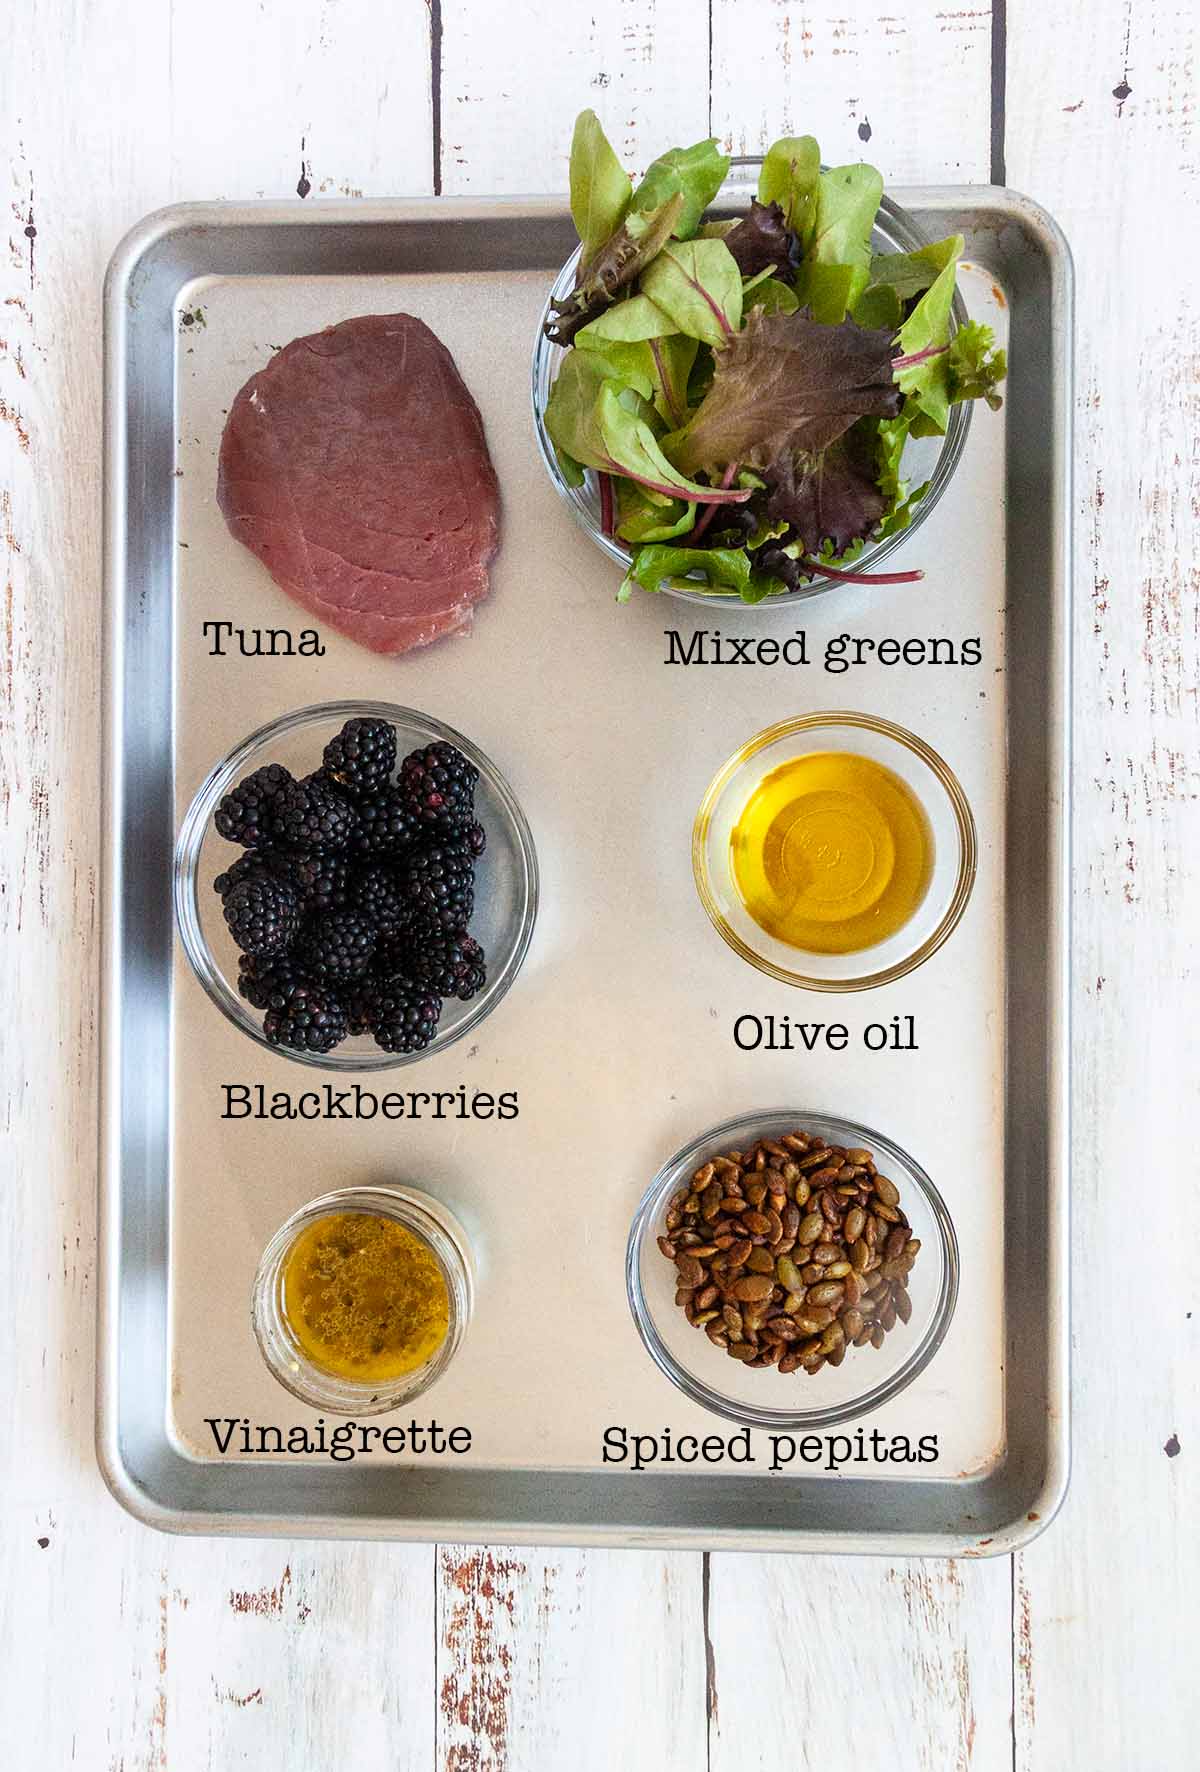 Ingredients for grilled tuna salad--tuna, greens, blackberries, olive oil, vinaigrette dressing, and spiced pepitas.